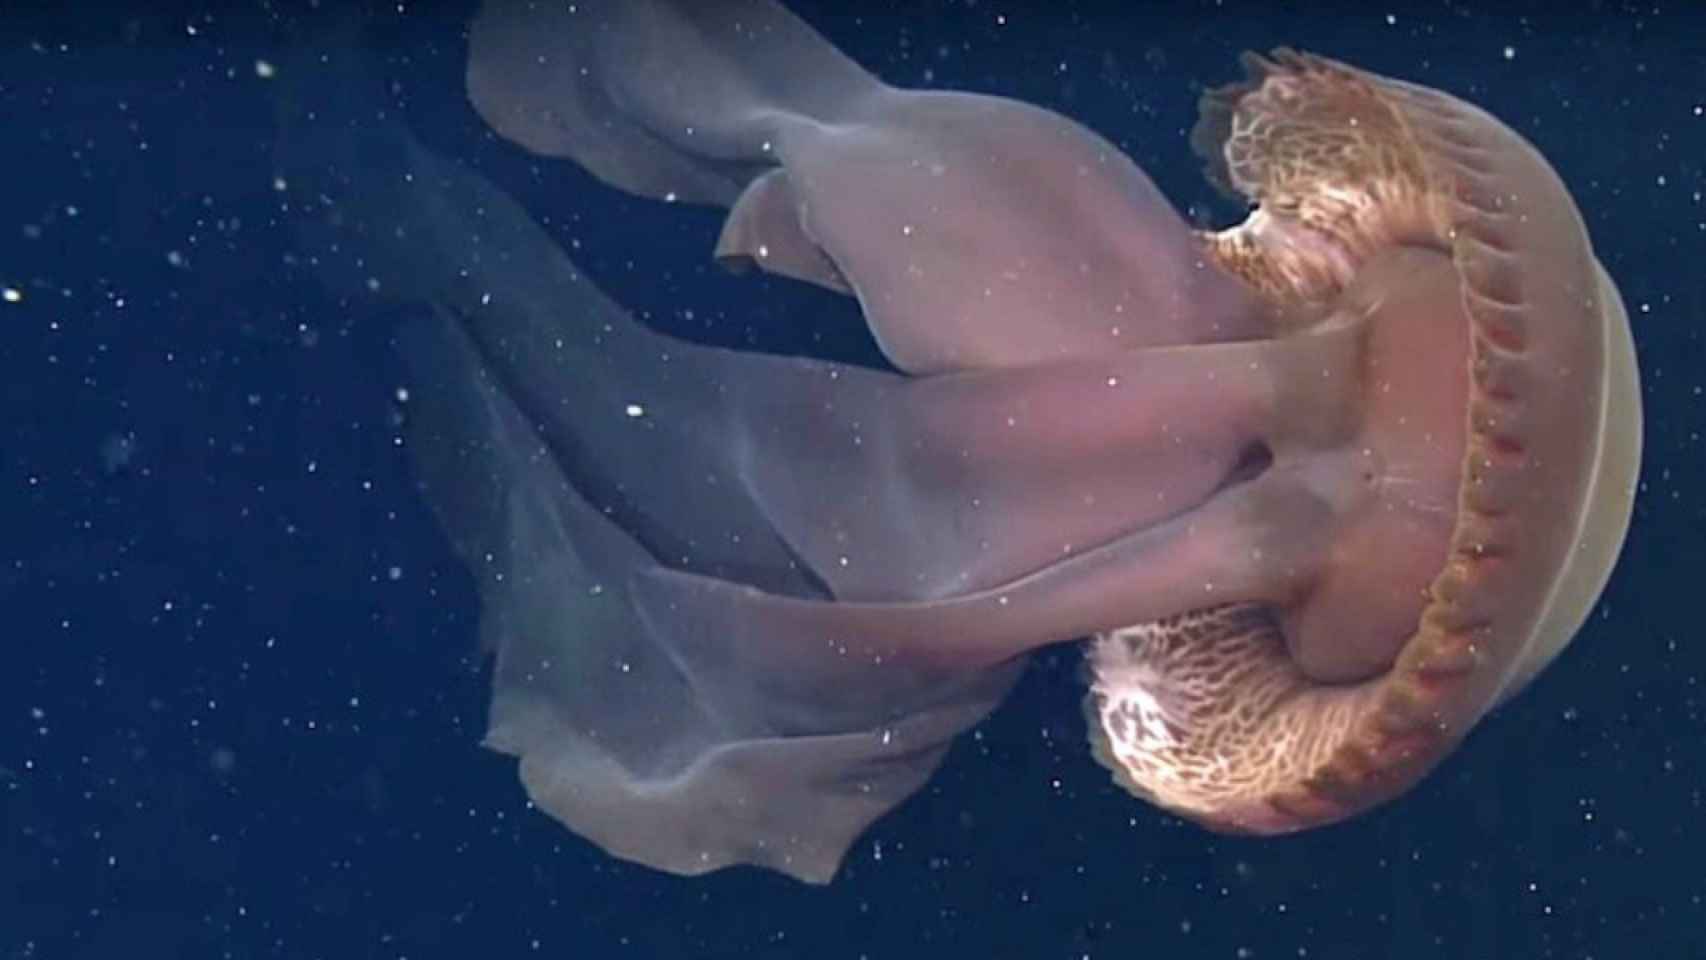 Imagen medusa de las profundidades